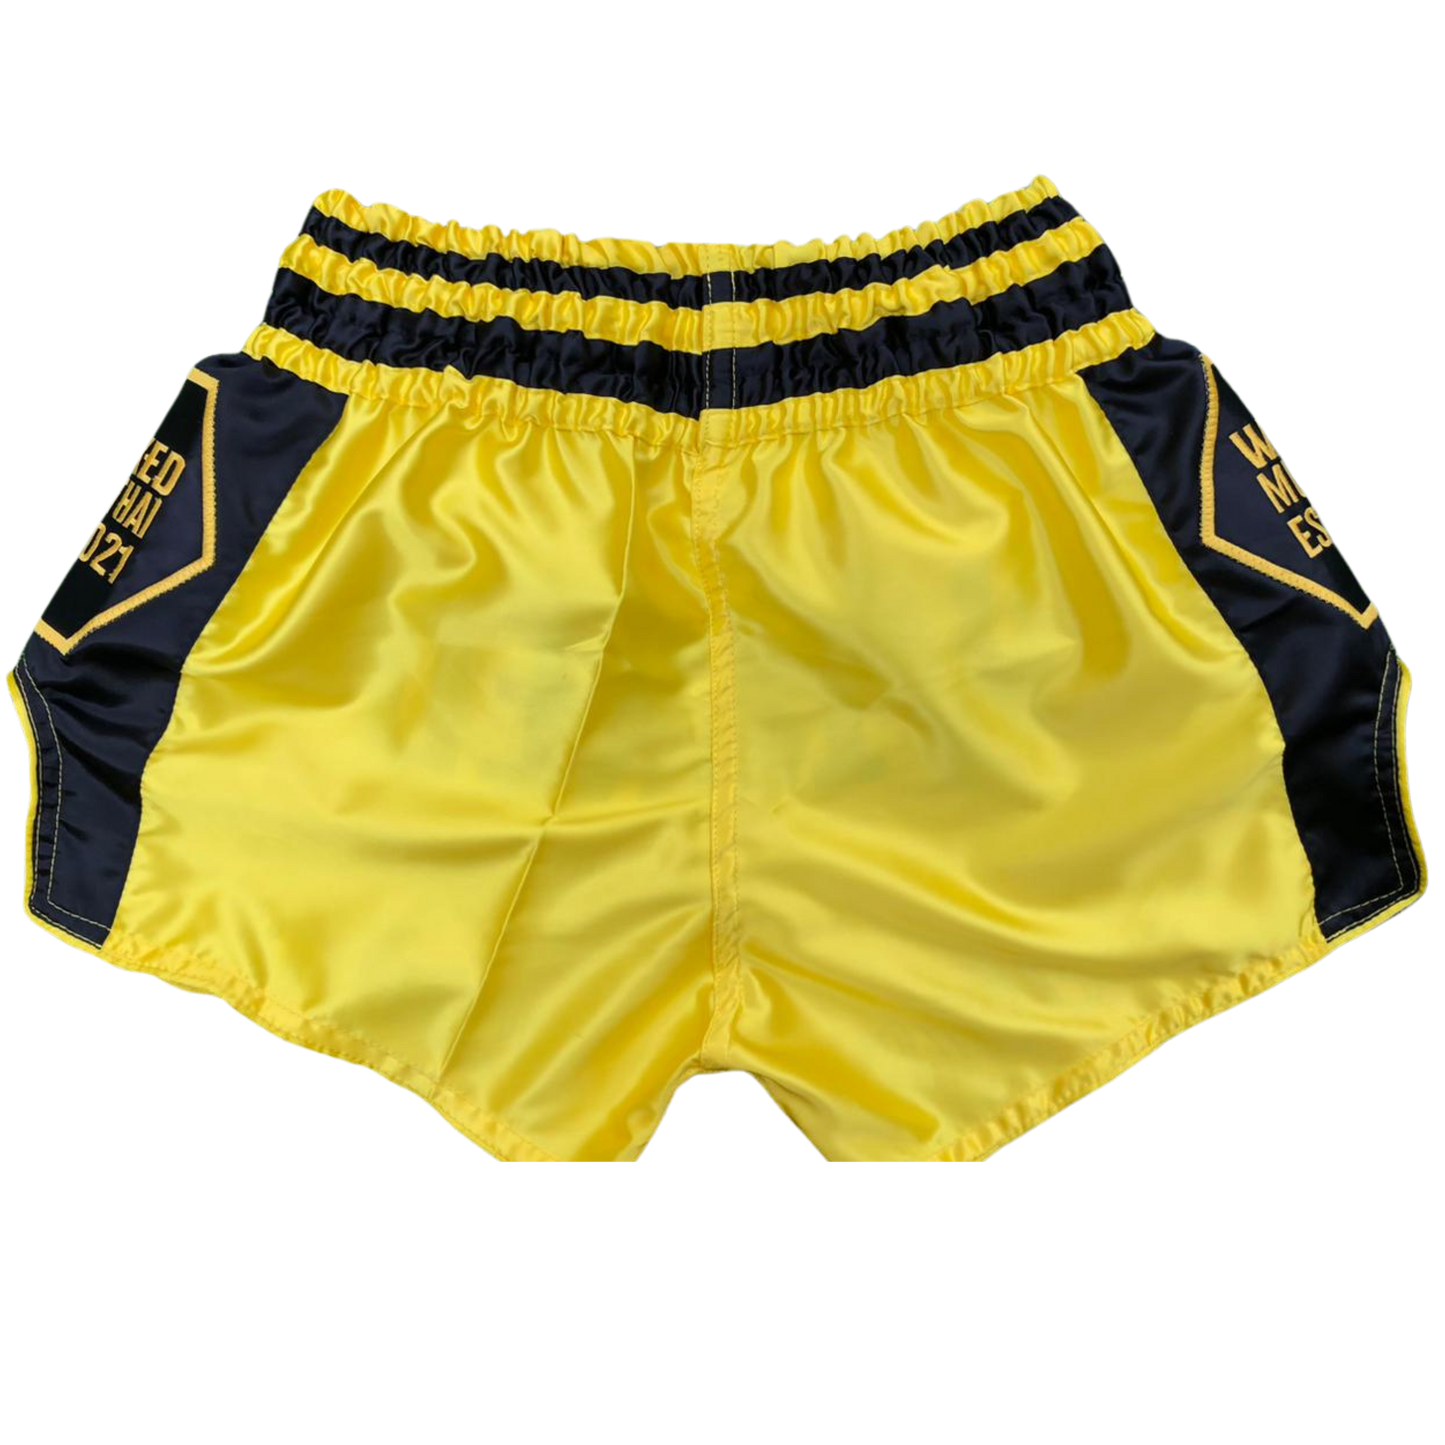 *New* Yellow and Black Muay Thai Shorts